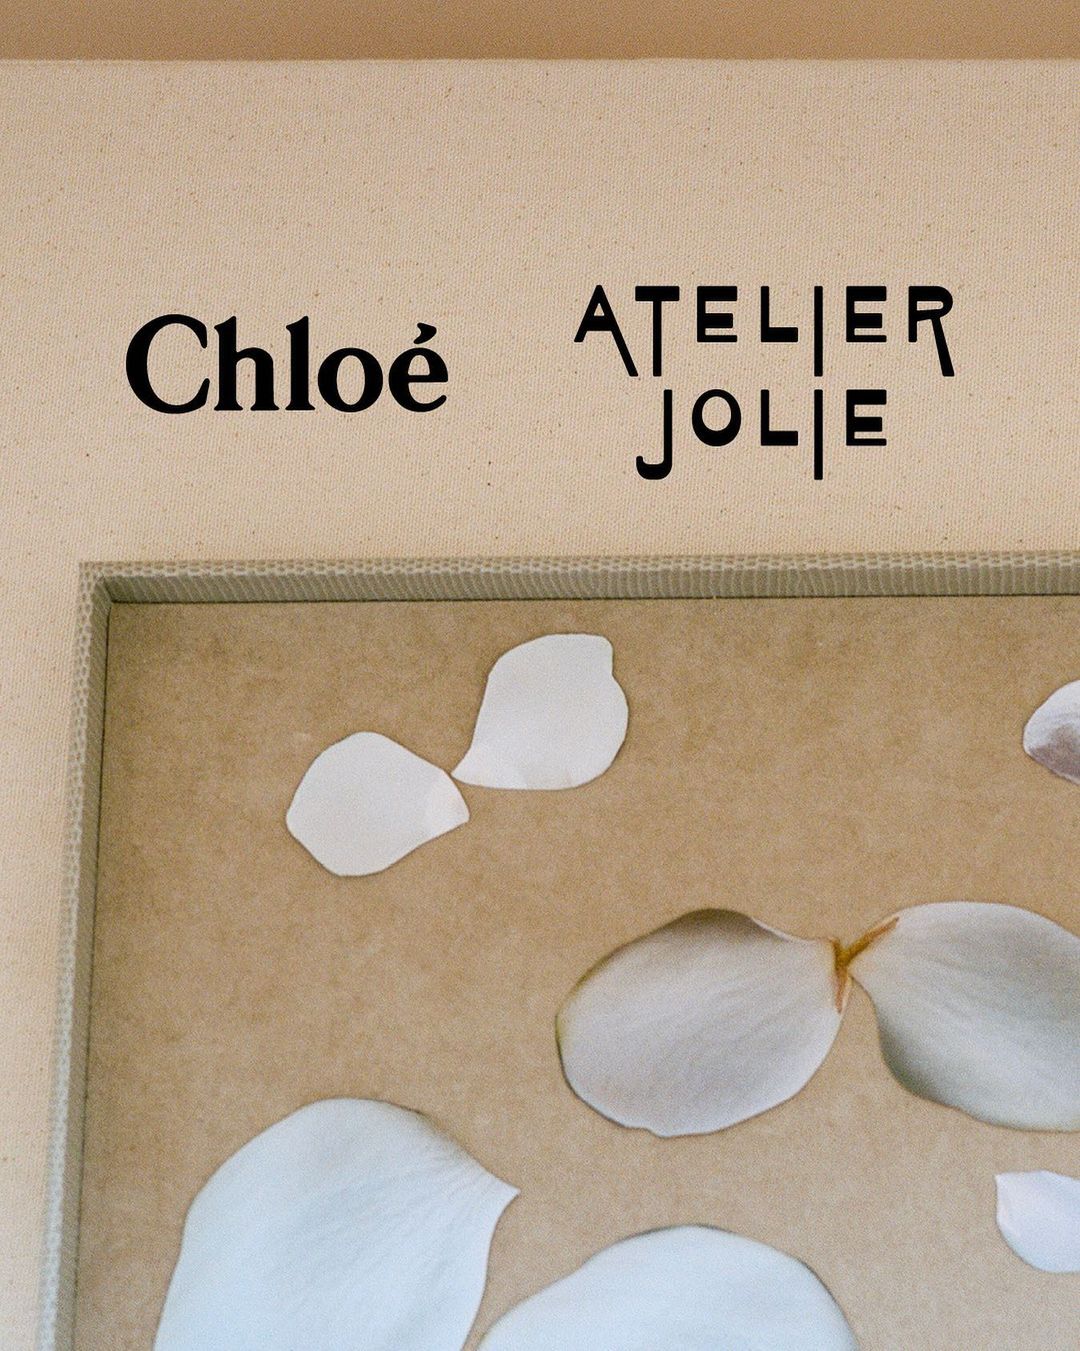 Chloé та Atelier Jolie капсульна колекція